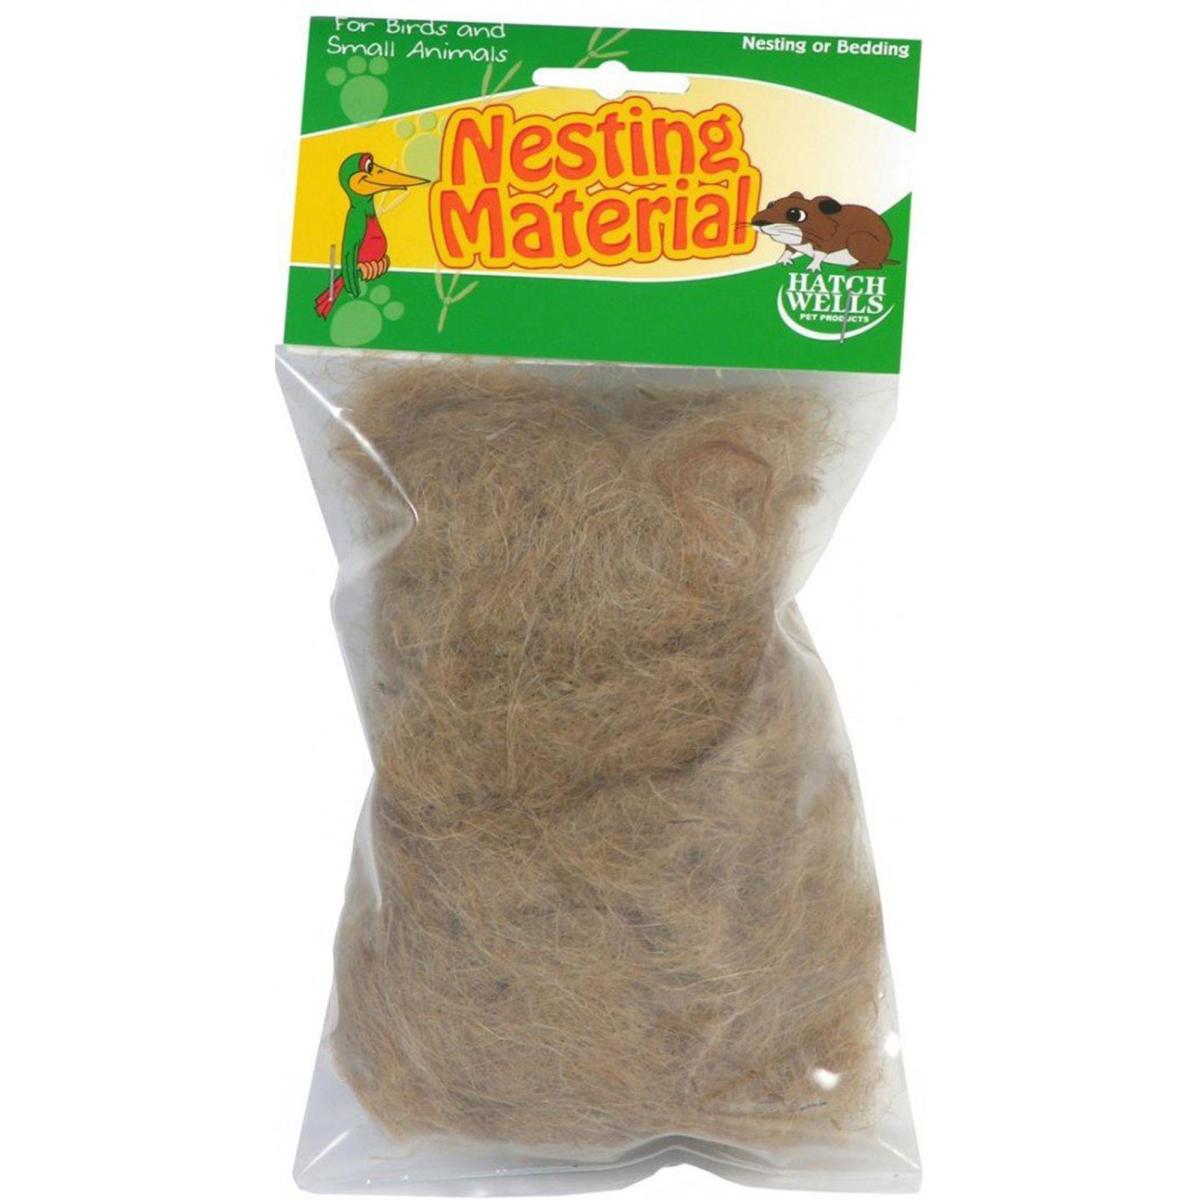 Hatchwells Bird Nesting Material For Breeding Or Bedding